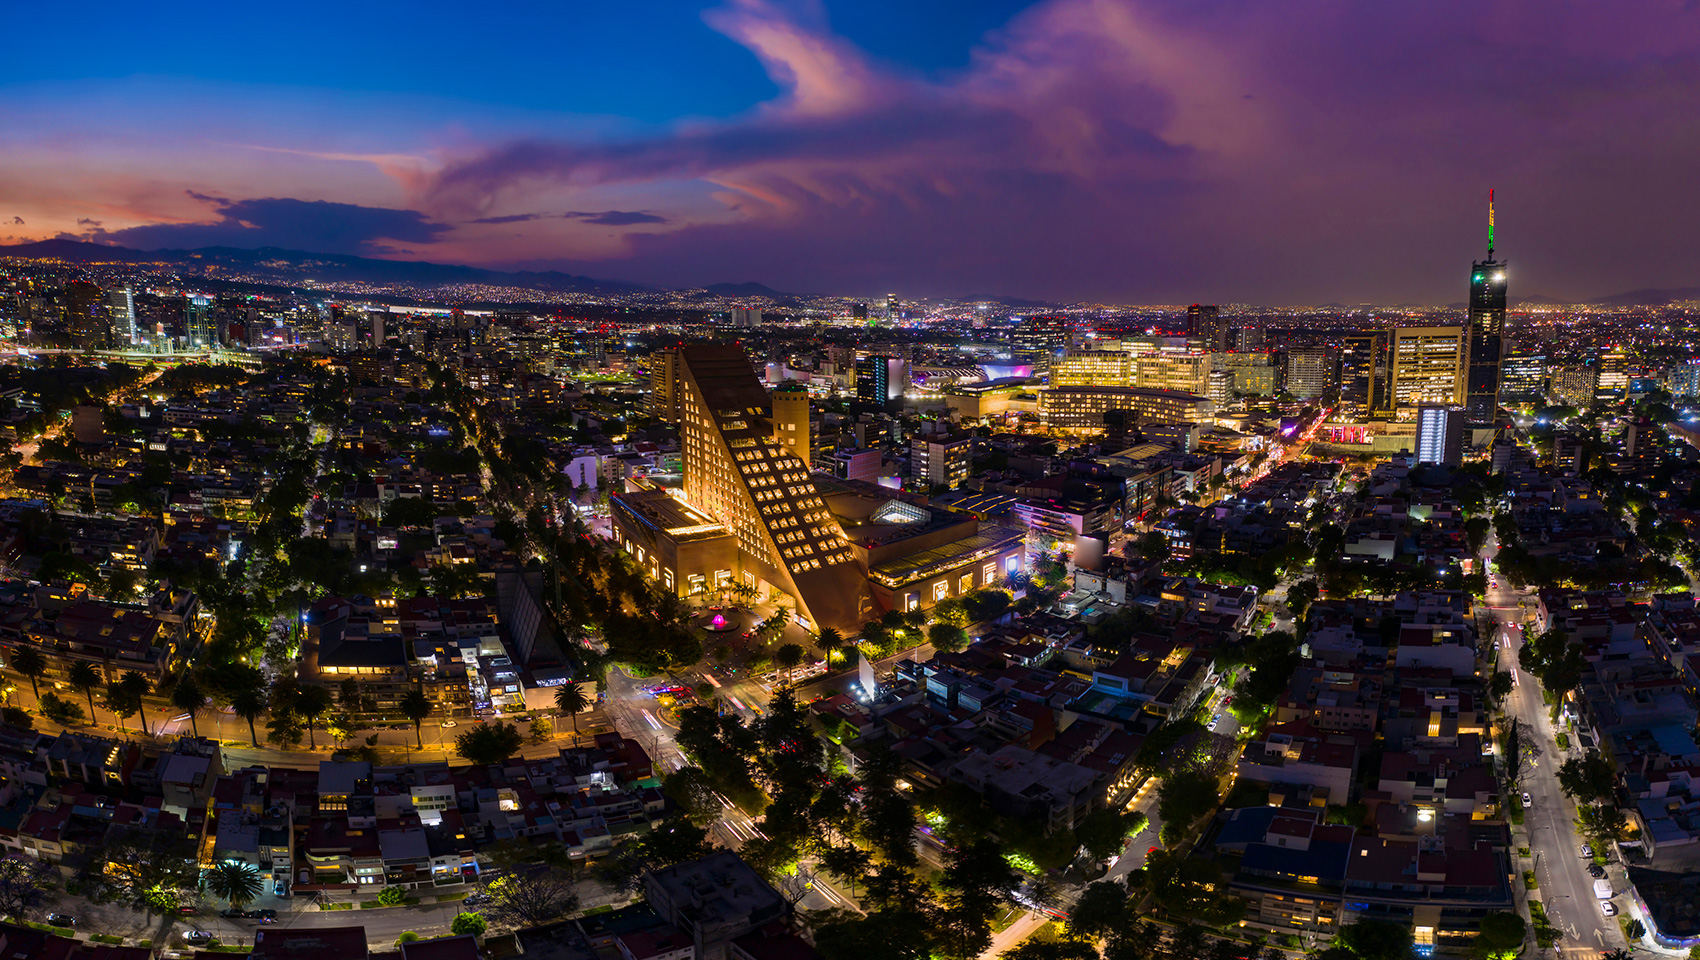 avendia presidente masaryk at night in polanco mexico city